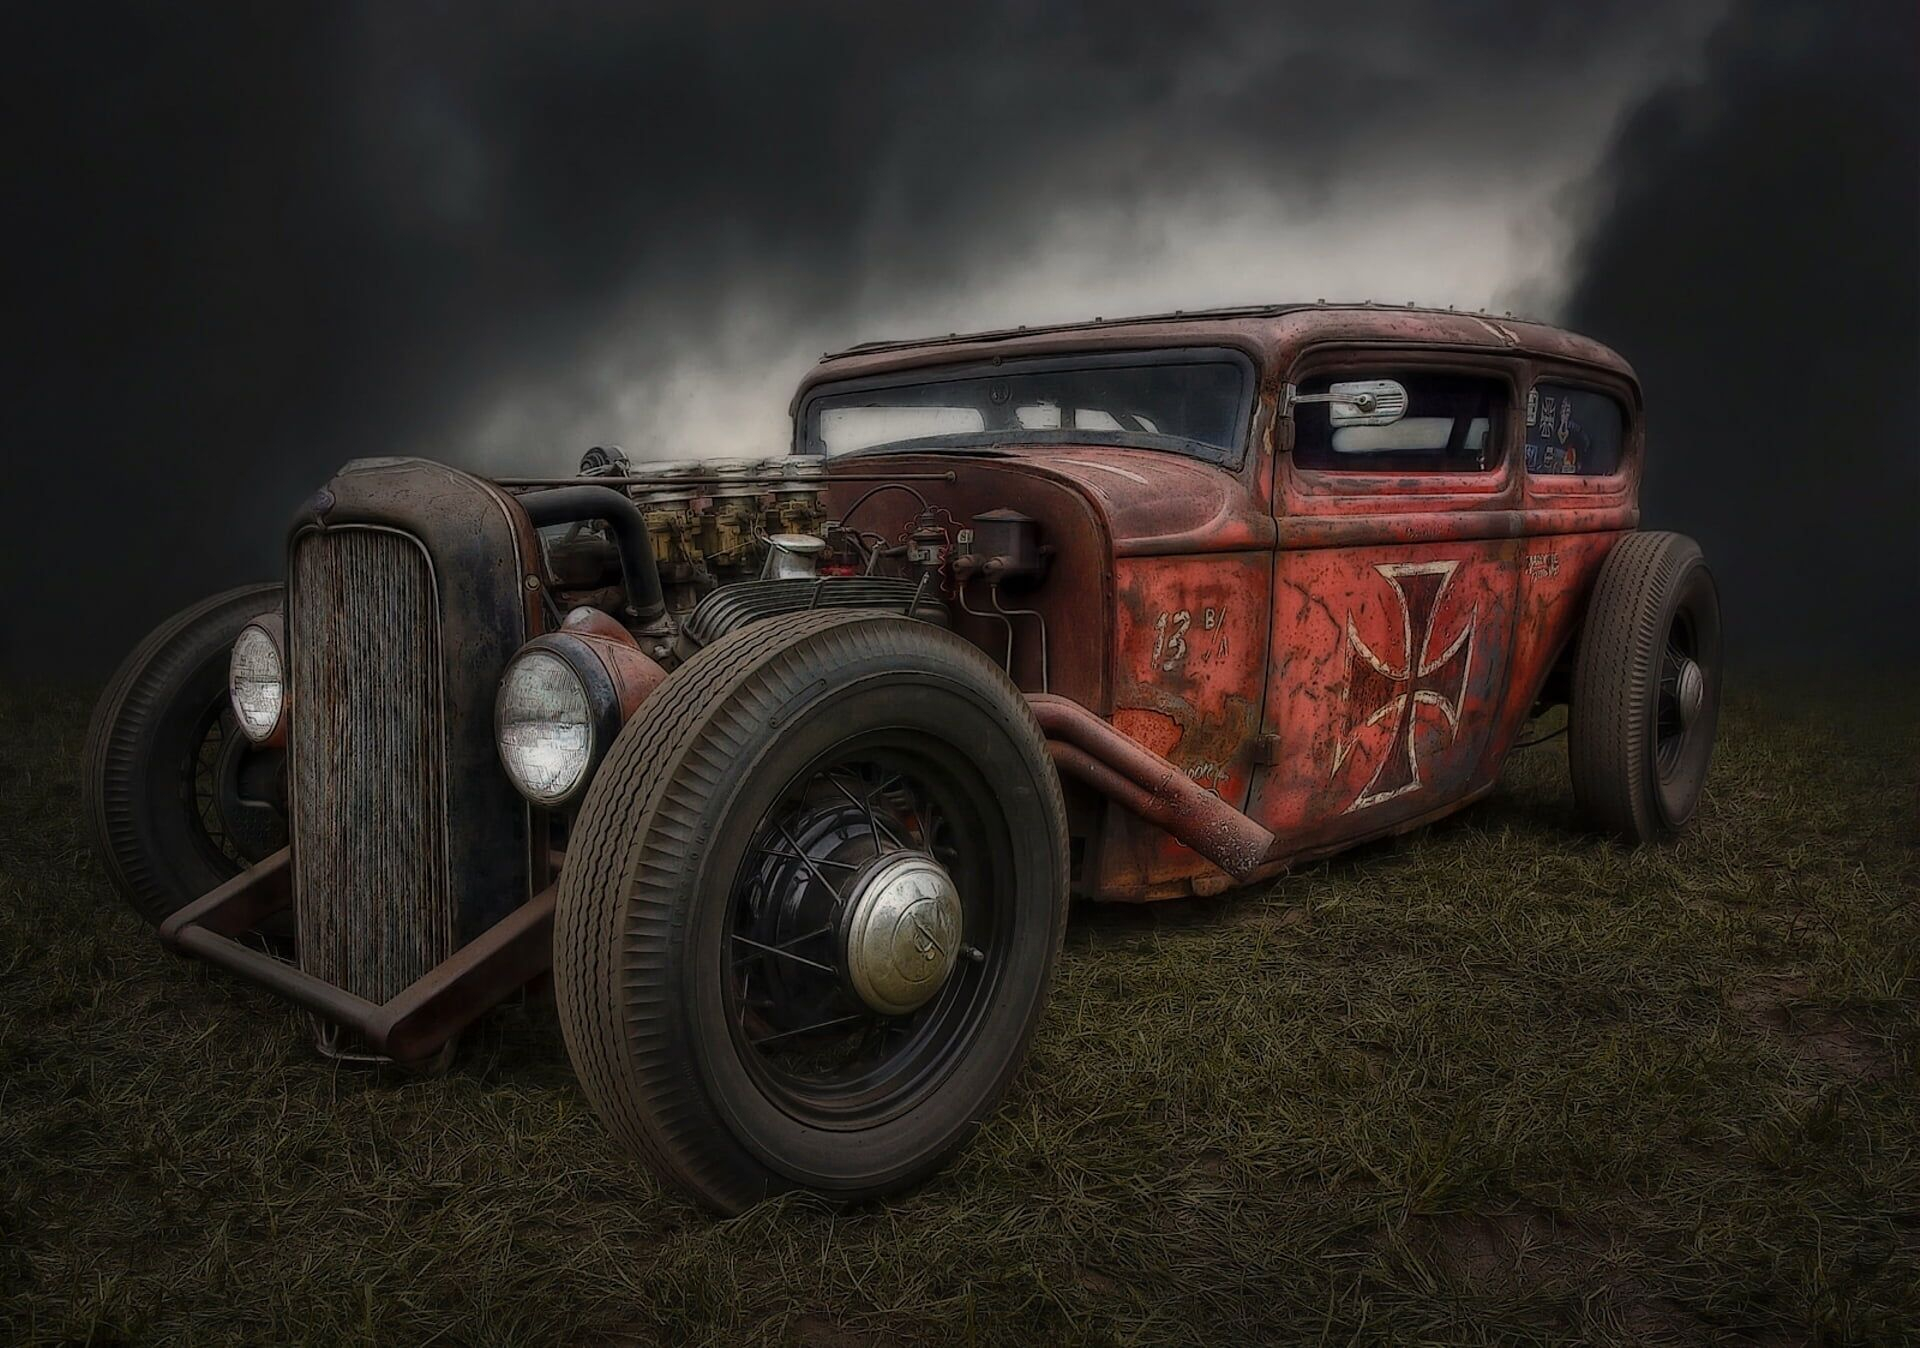 1920x1348 classic red vehicle\u003d #retro Hot Rod Rat Rod Hot rod #1080P #wallpaper #hdwallpaper #desktop | Voitures anciennes, Voiture, Ecran voiture